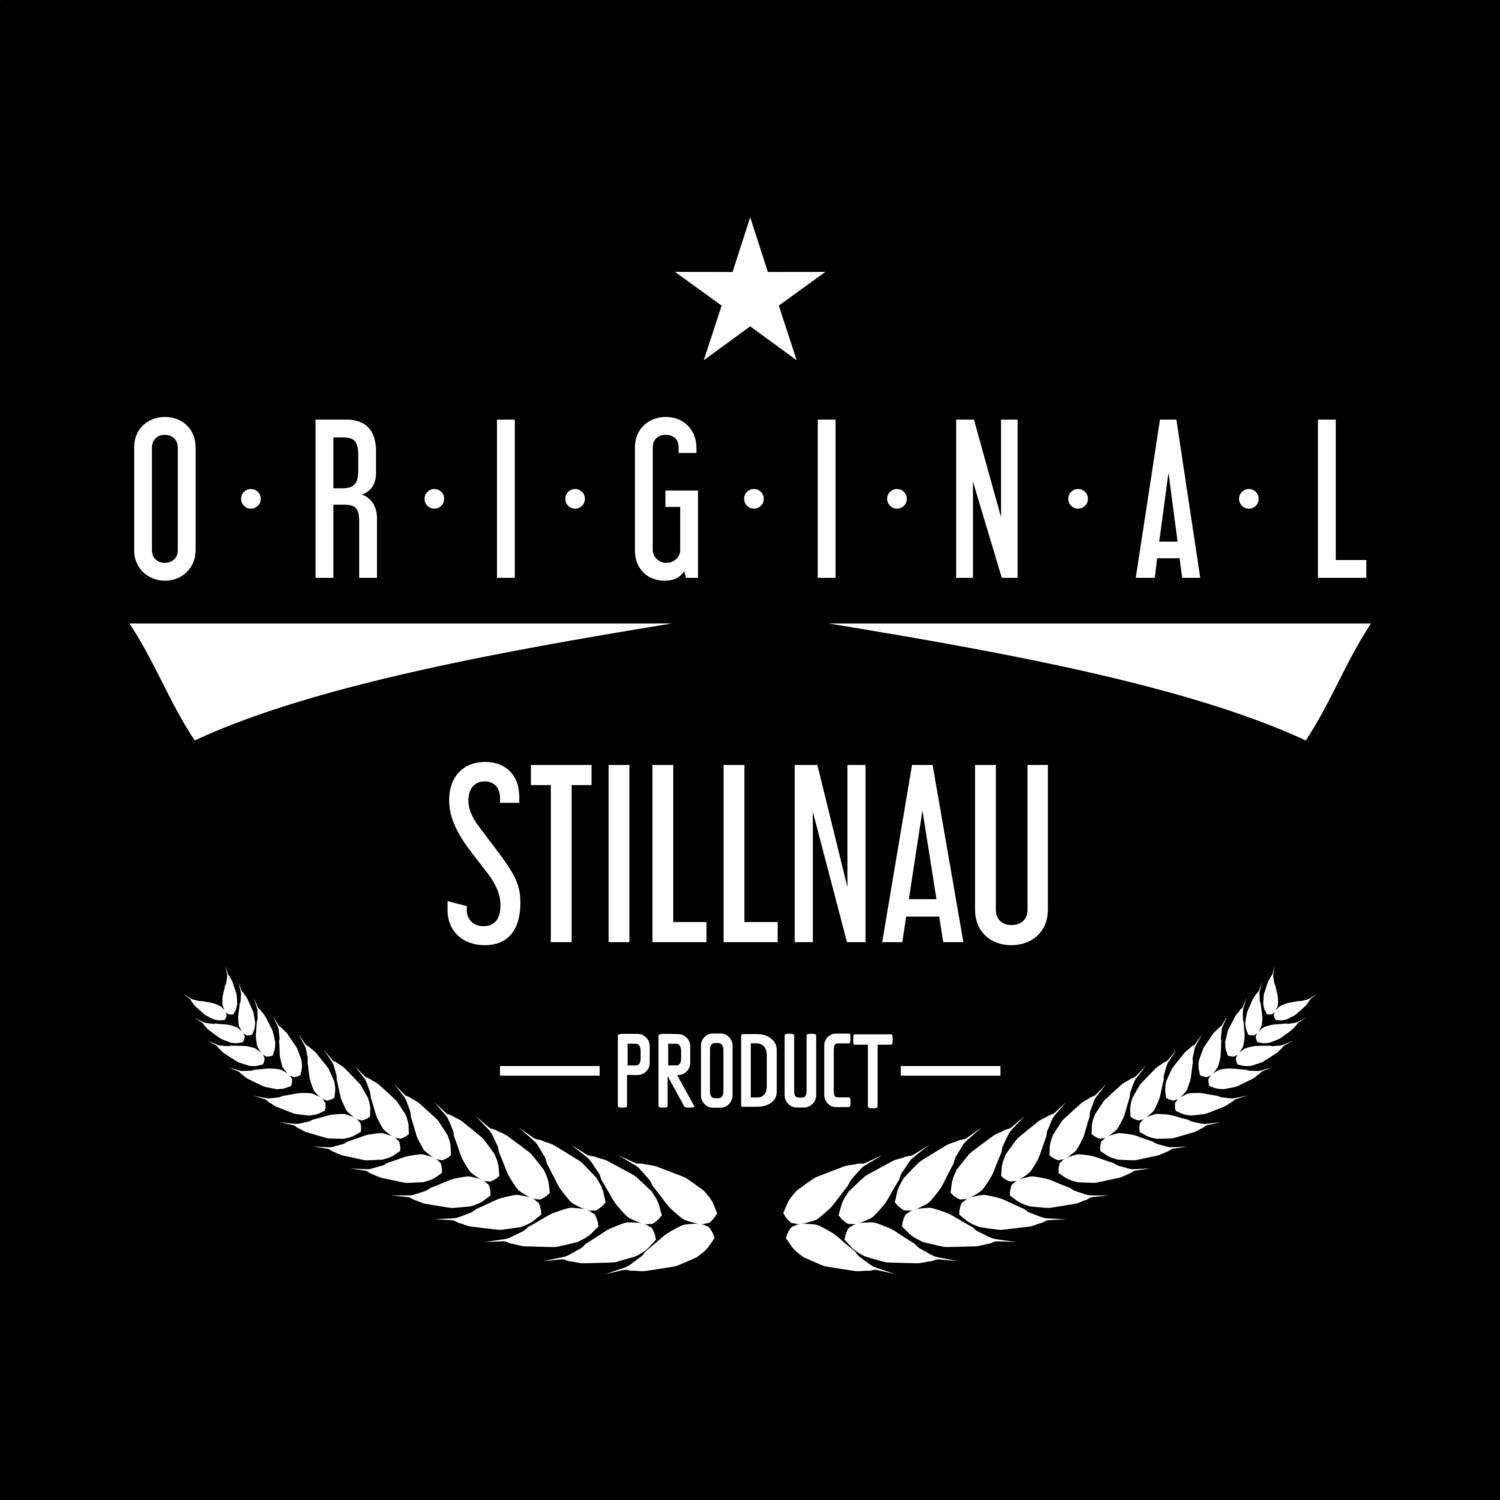 Stillnau T-Shirt »Original Product«